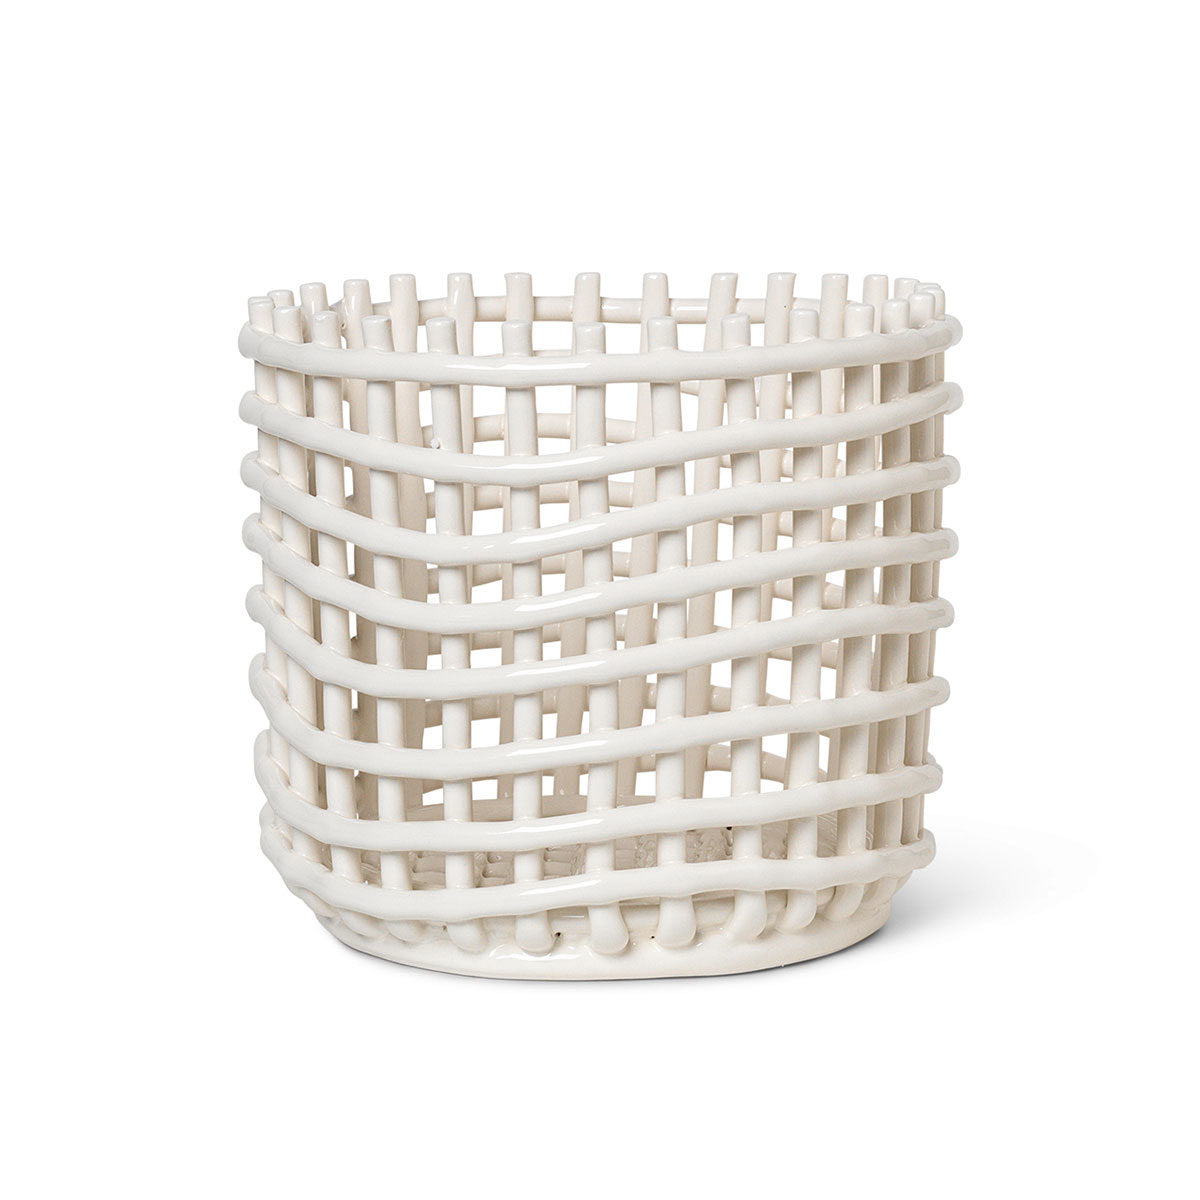 Ceramic Basket